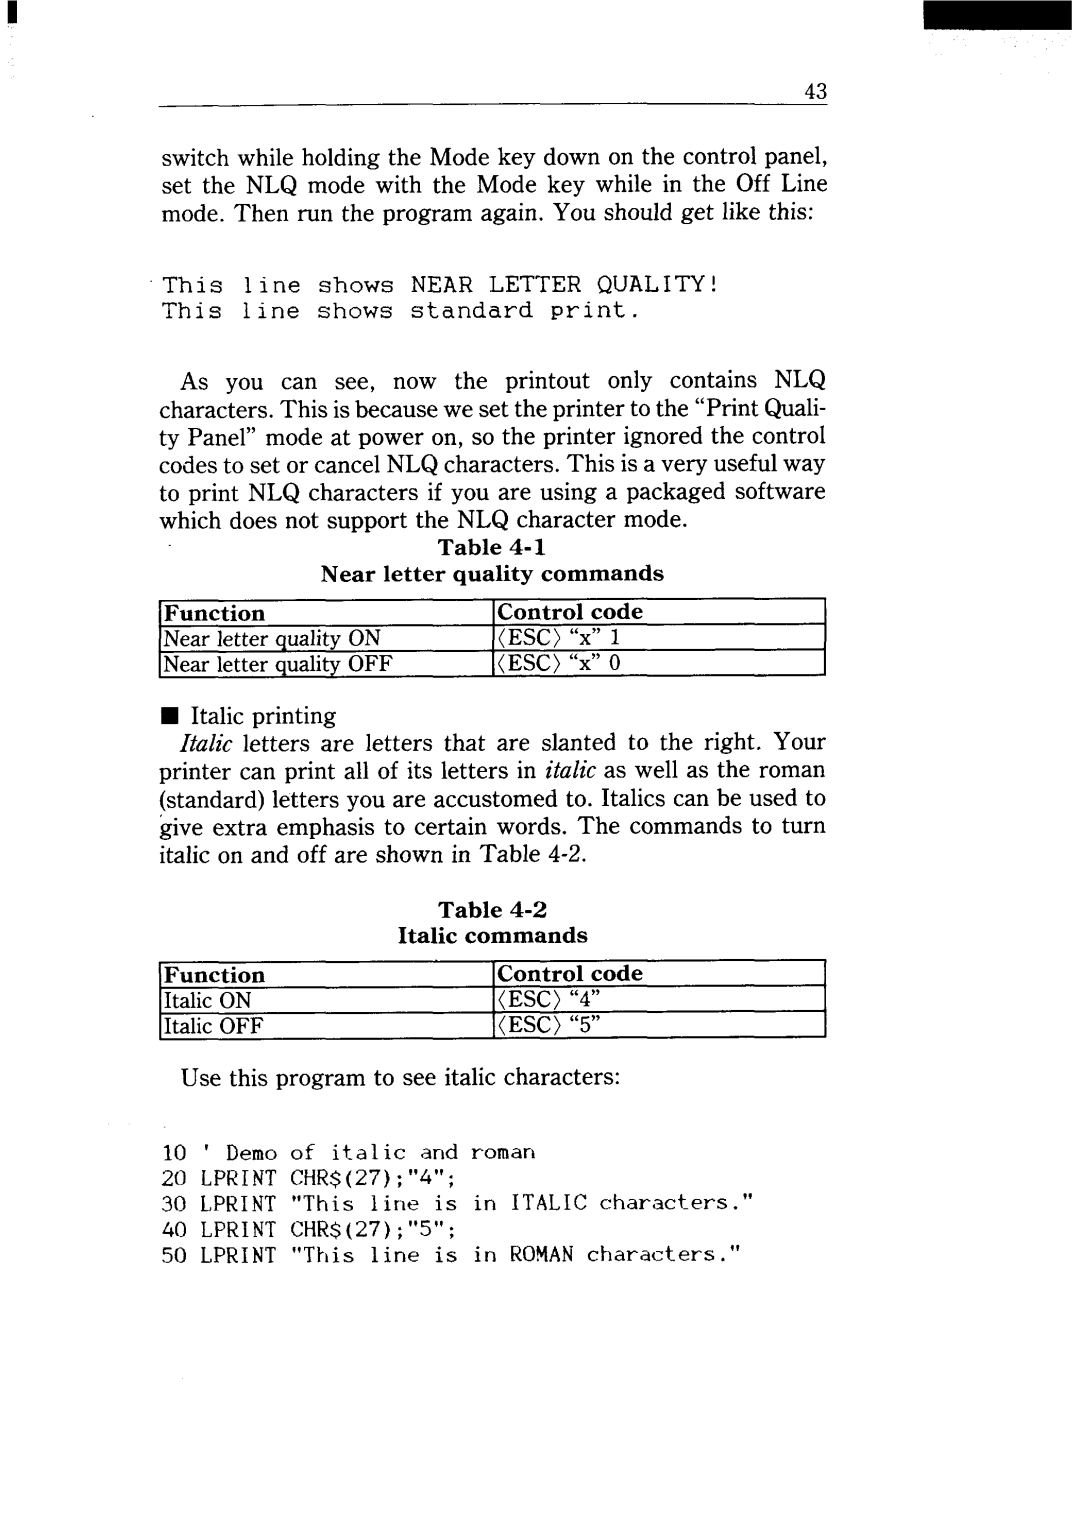 Star Micronics NX-15 user manual Italic ON, ESC “4”, Italic OFF, ESC “5” 